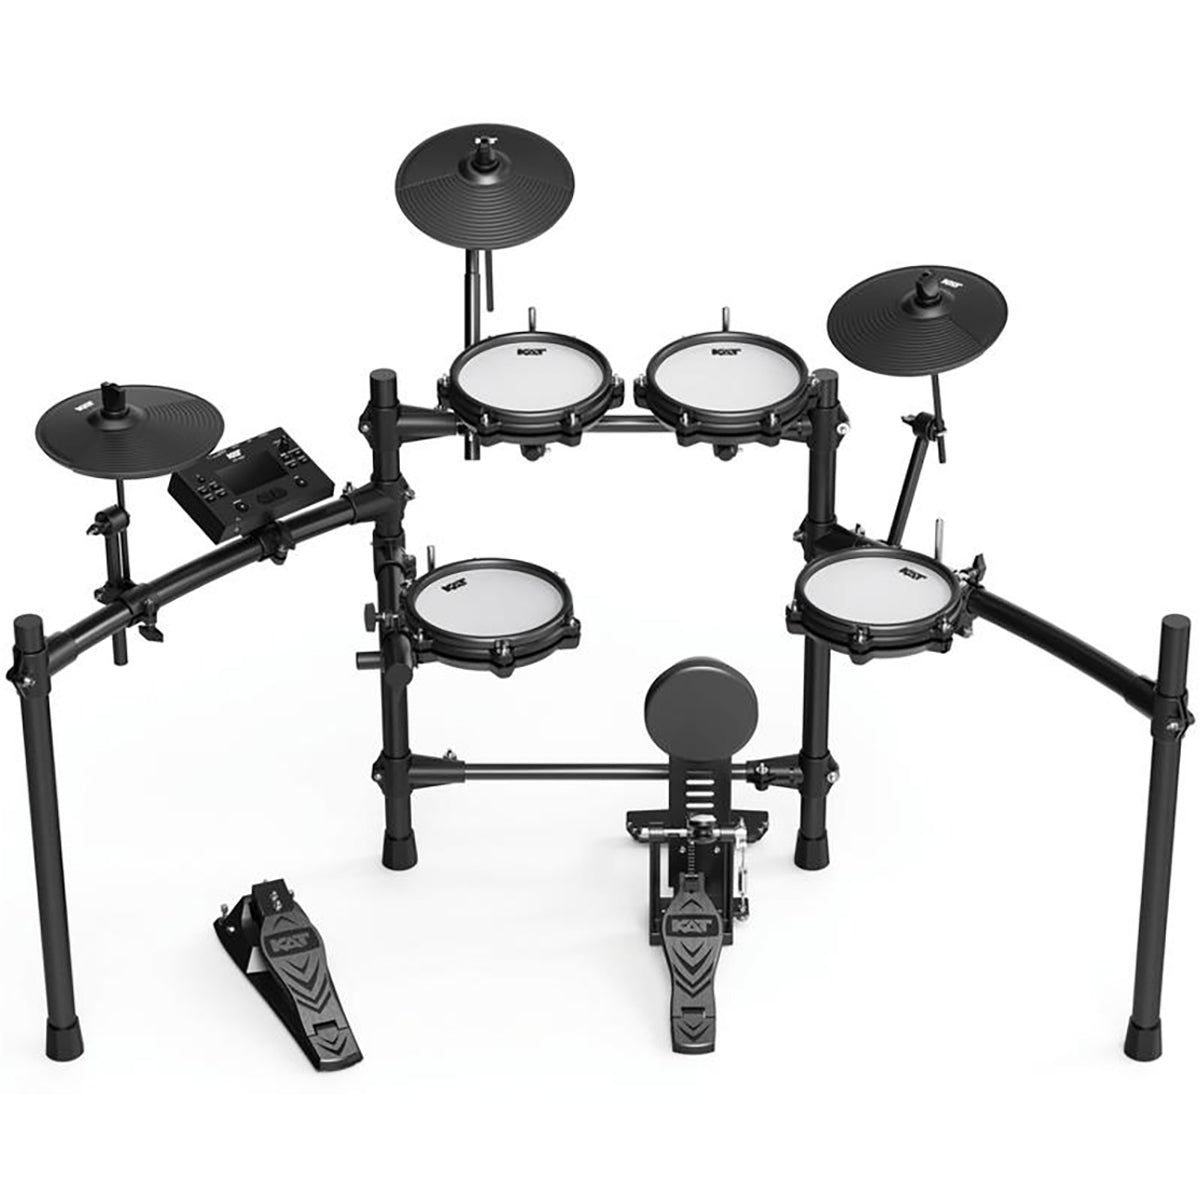 Kat Percussion KT-150 Electronic Drum Set - View 2